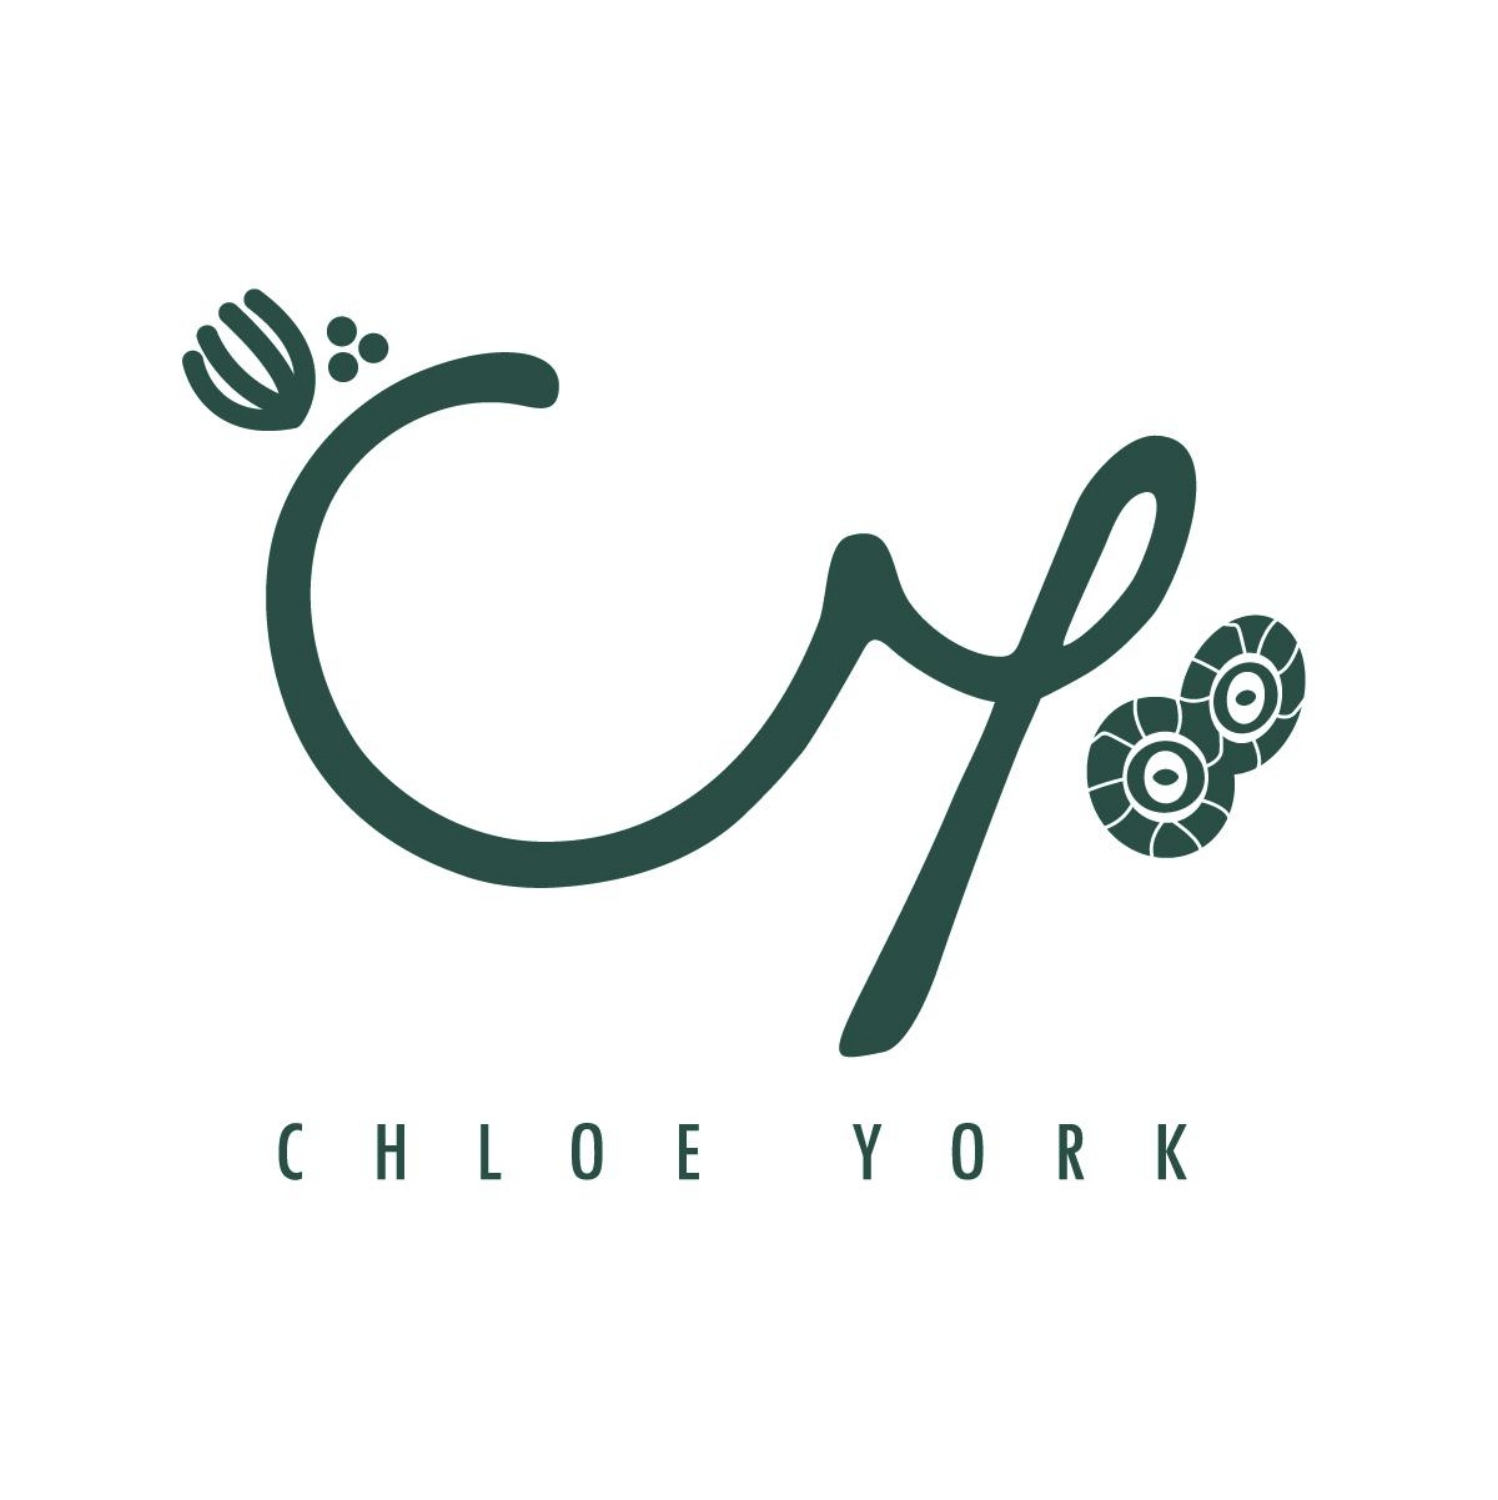 Chloe York